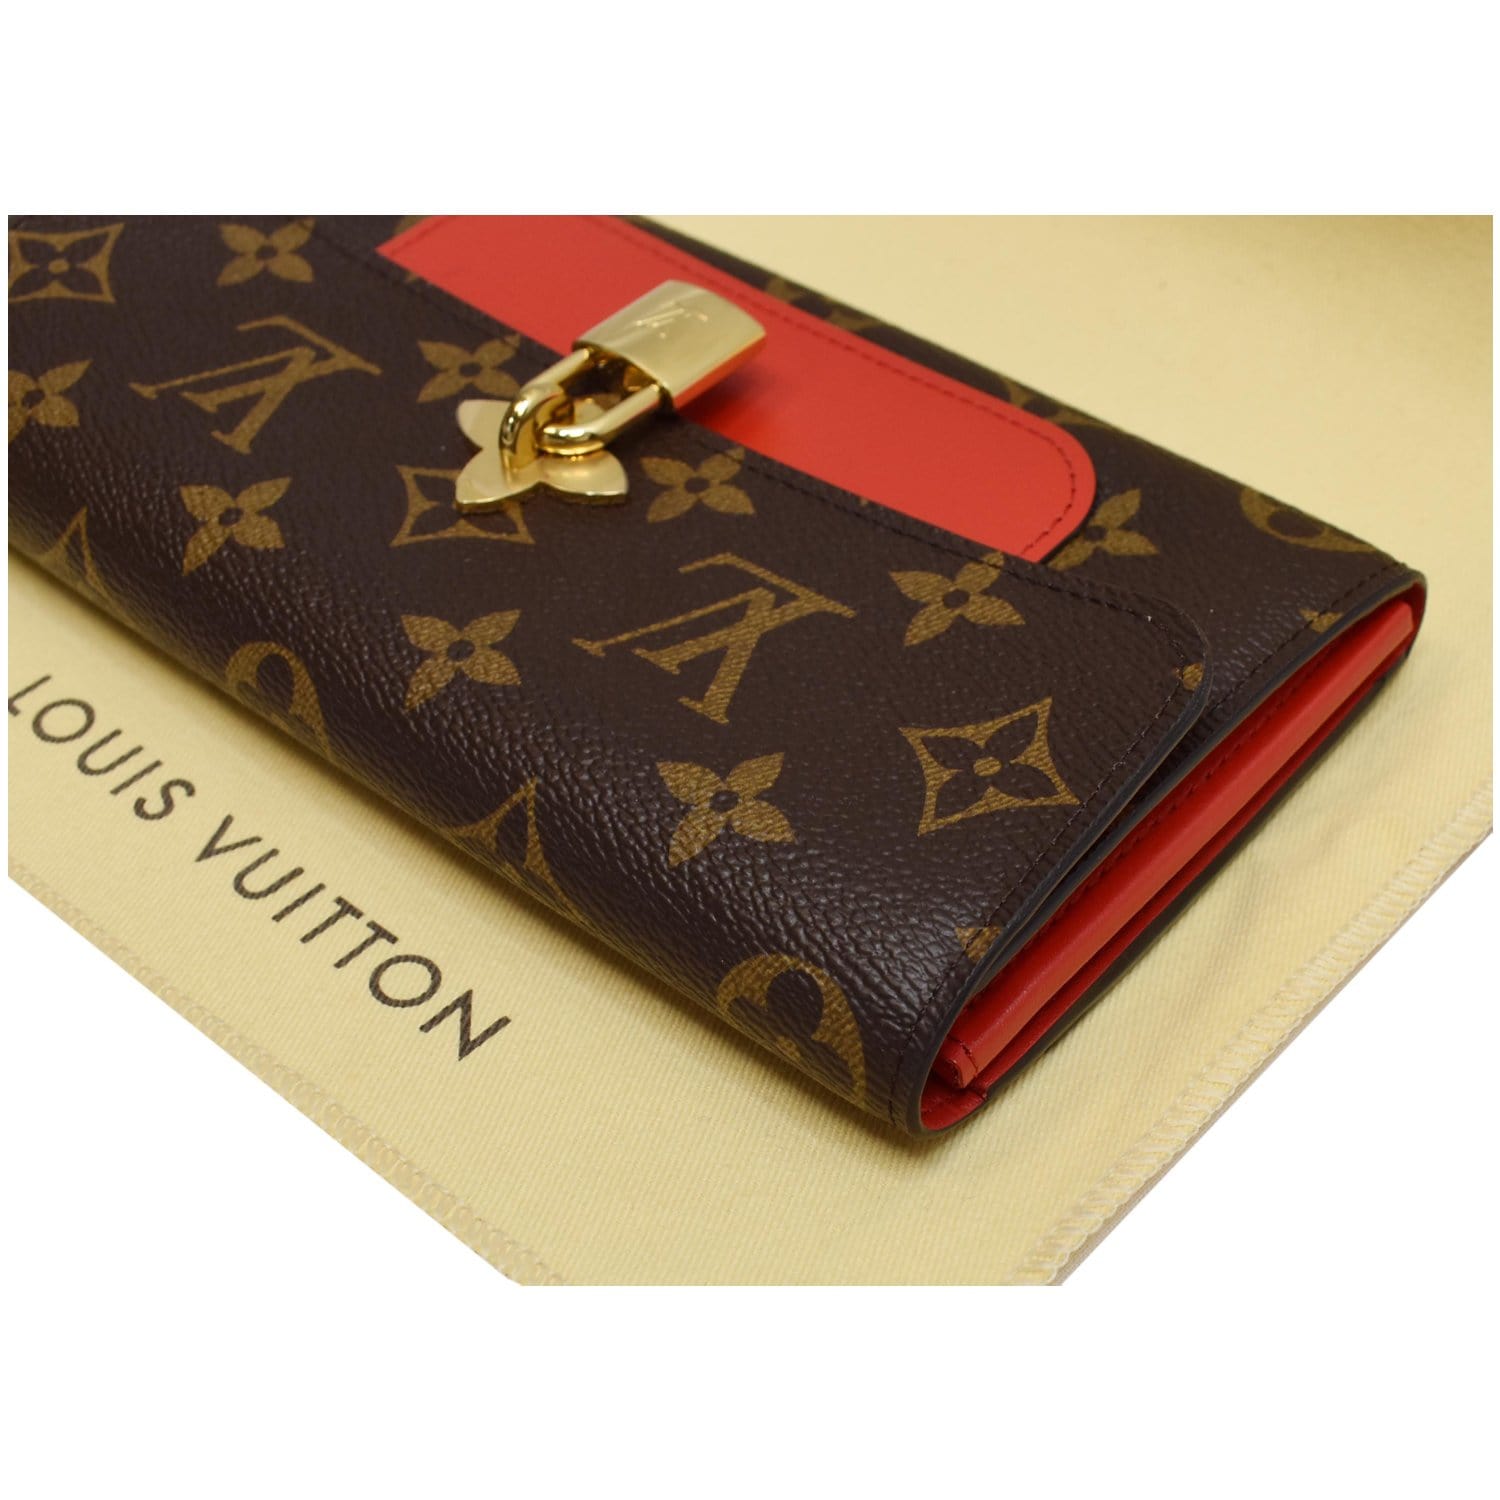 Louis Vuitton - Red Monogram Coated Canvas Flower Wallet